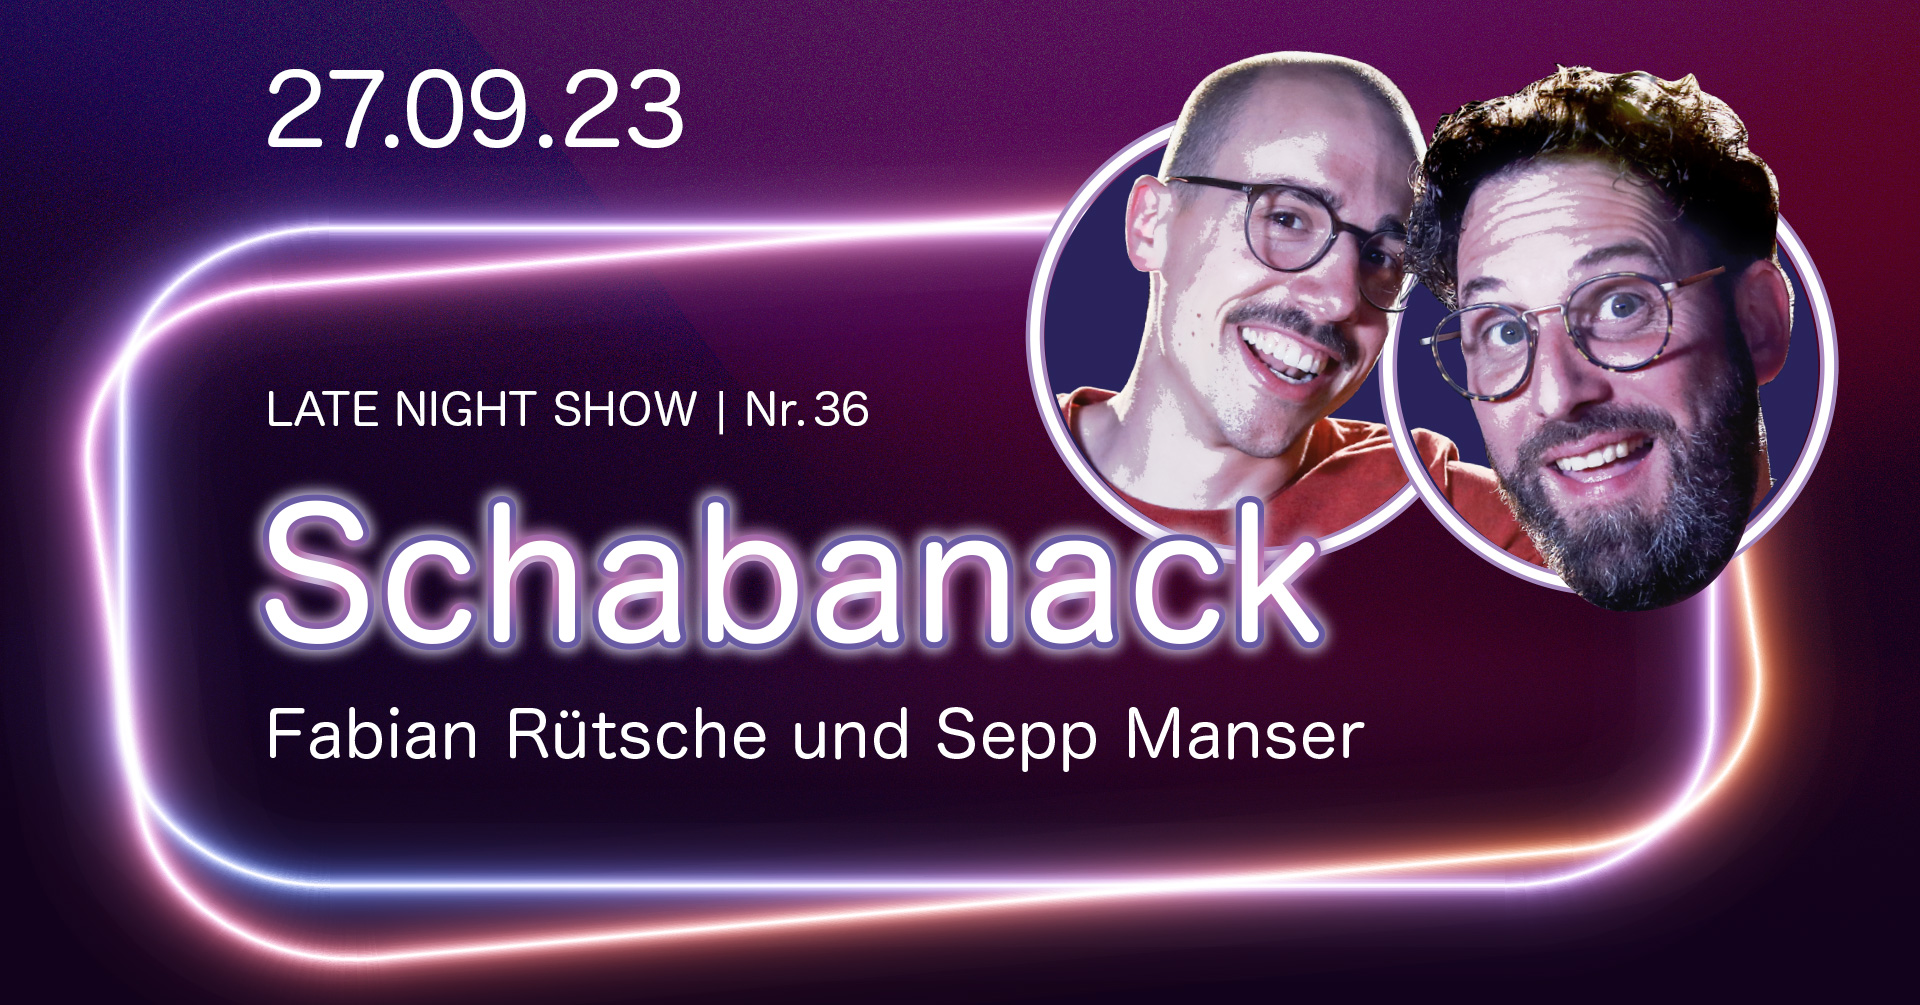 SCHABANACK Nr. 36 | Late-Night-Show